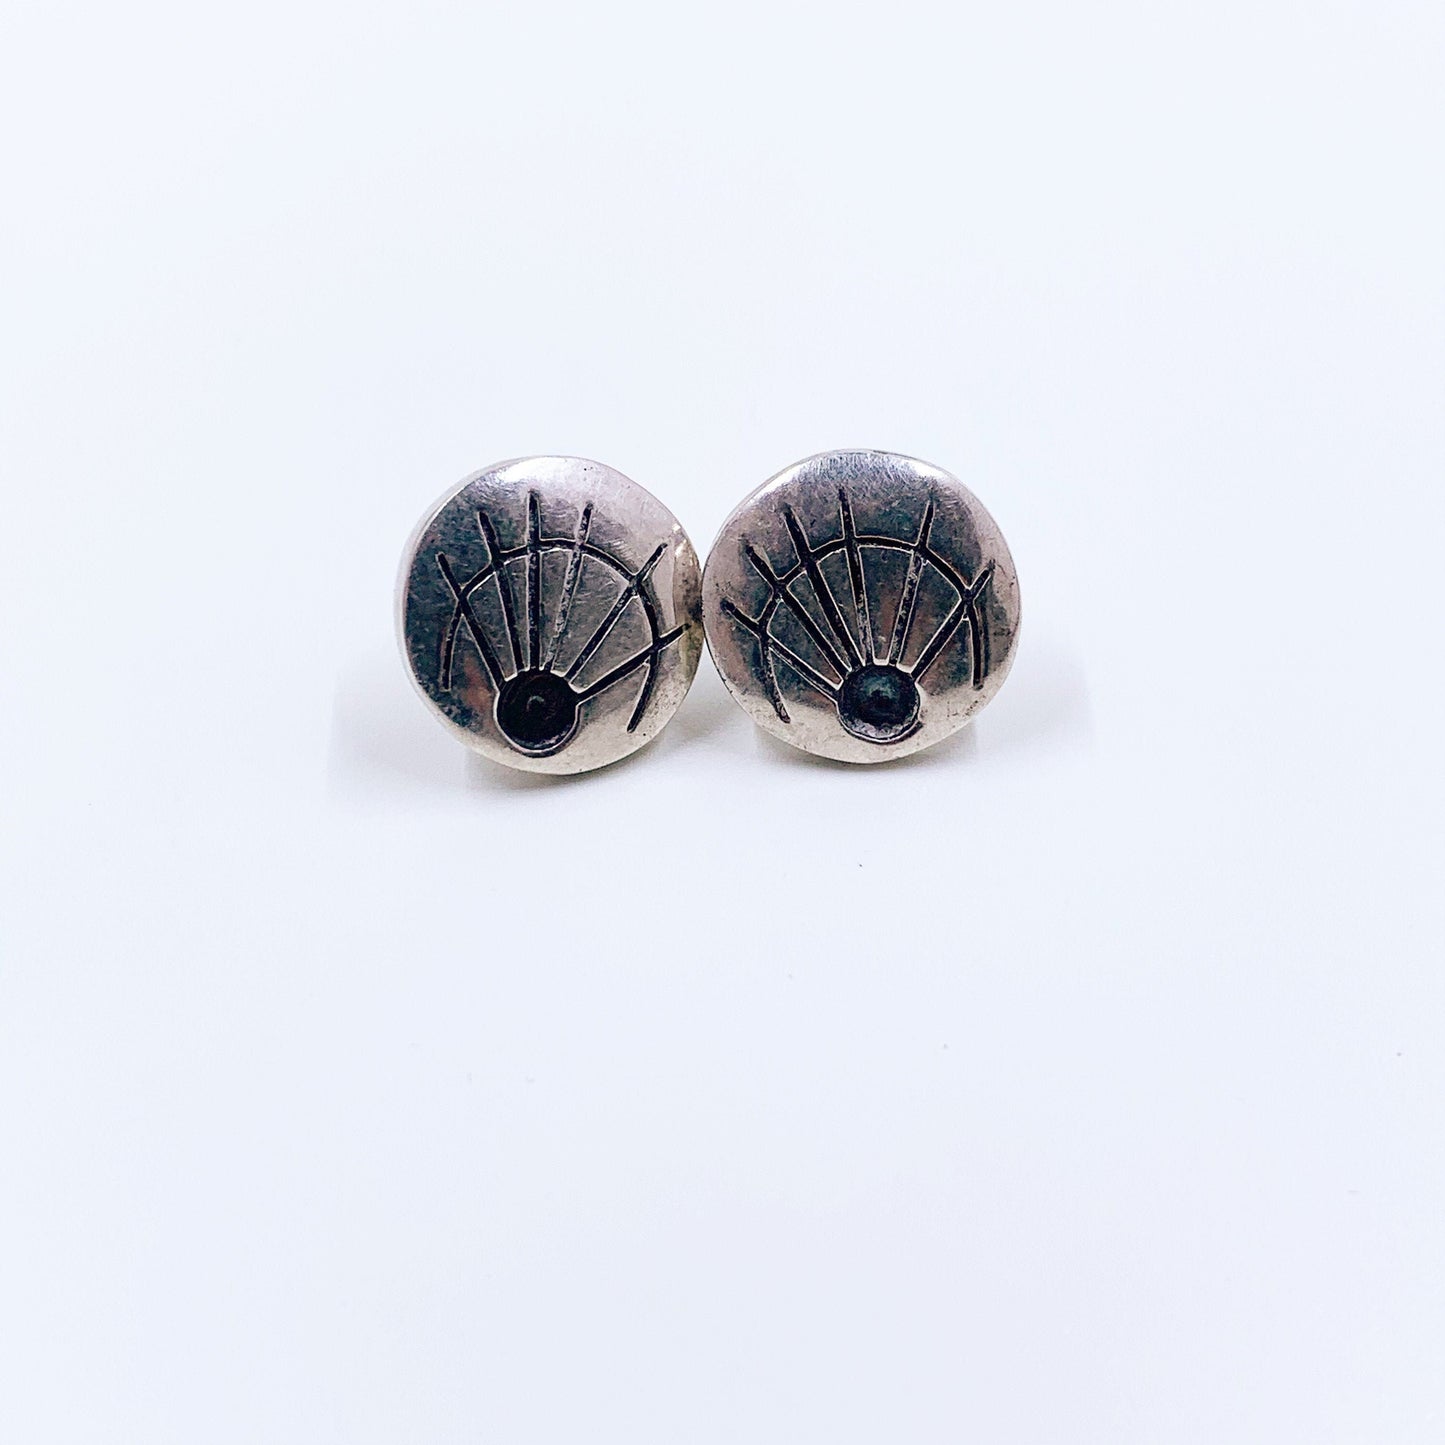 Vintage Modernist Silver Earrings | Geometric Abstract Line Earrings